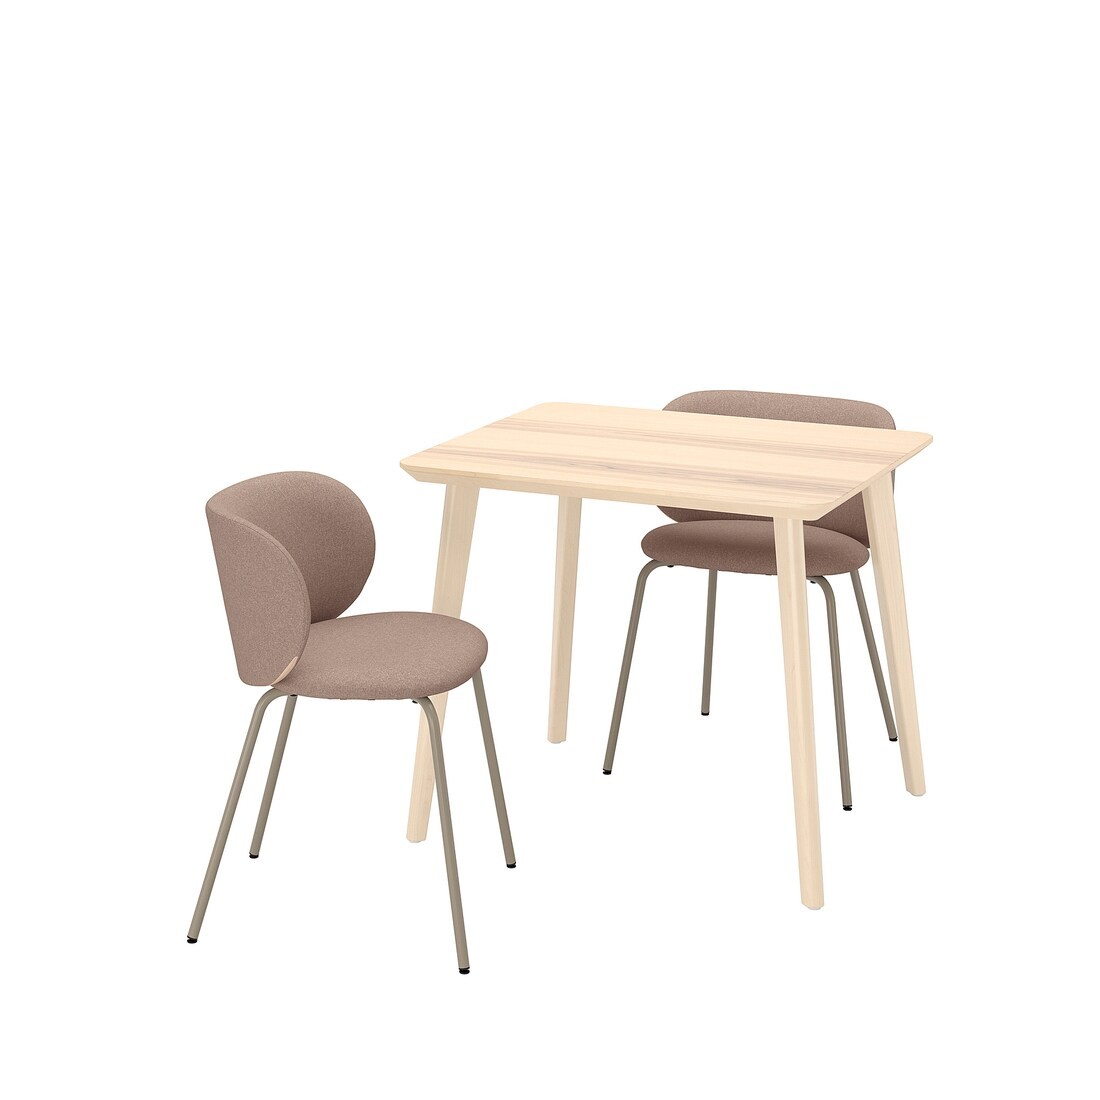 LISABO / KRYLBO Стол и 2 стула, ясеневый шпон/Тонеруд темно-бежевый, 88 см